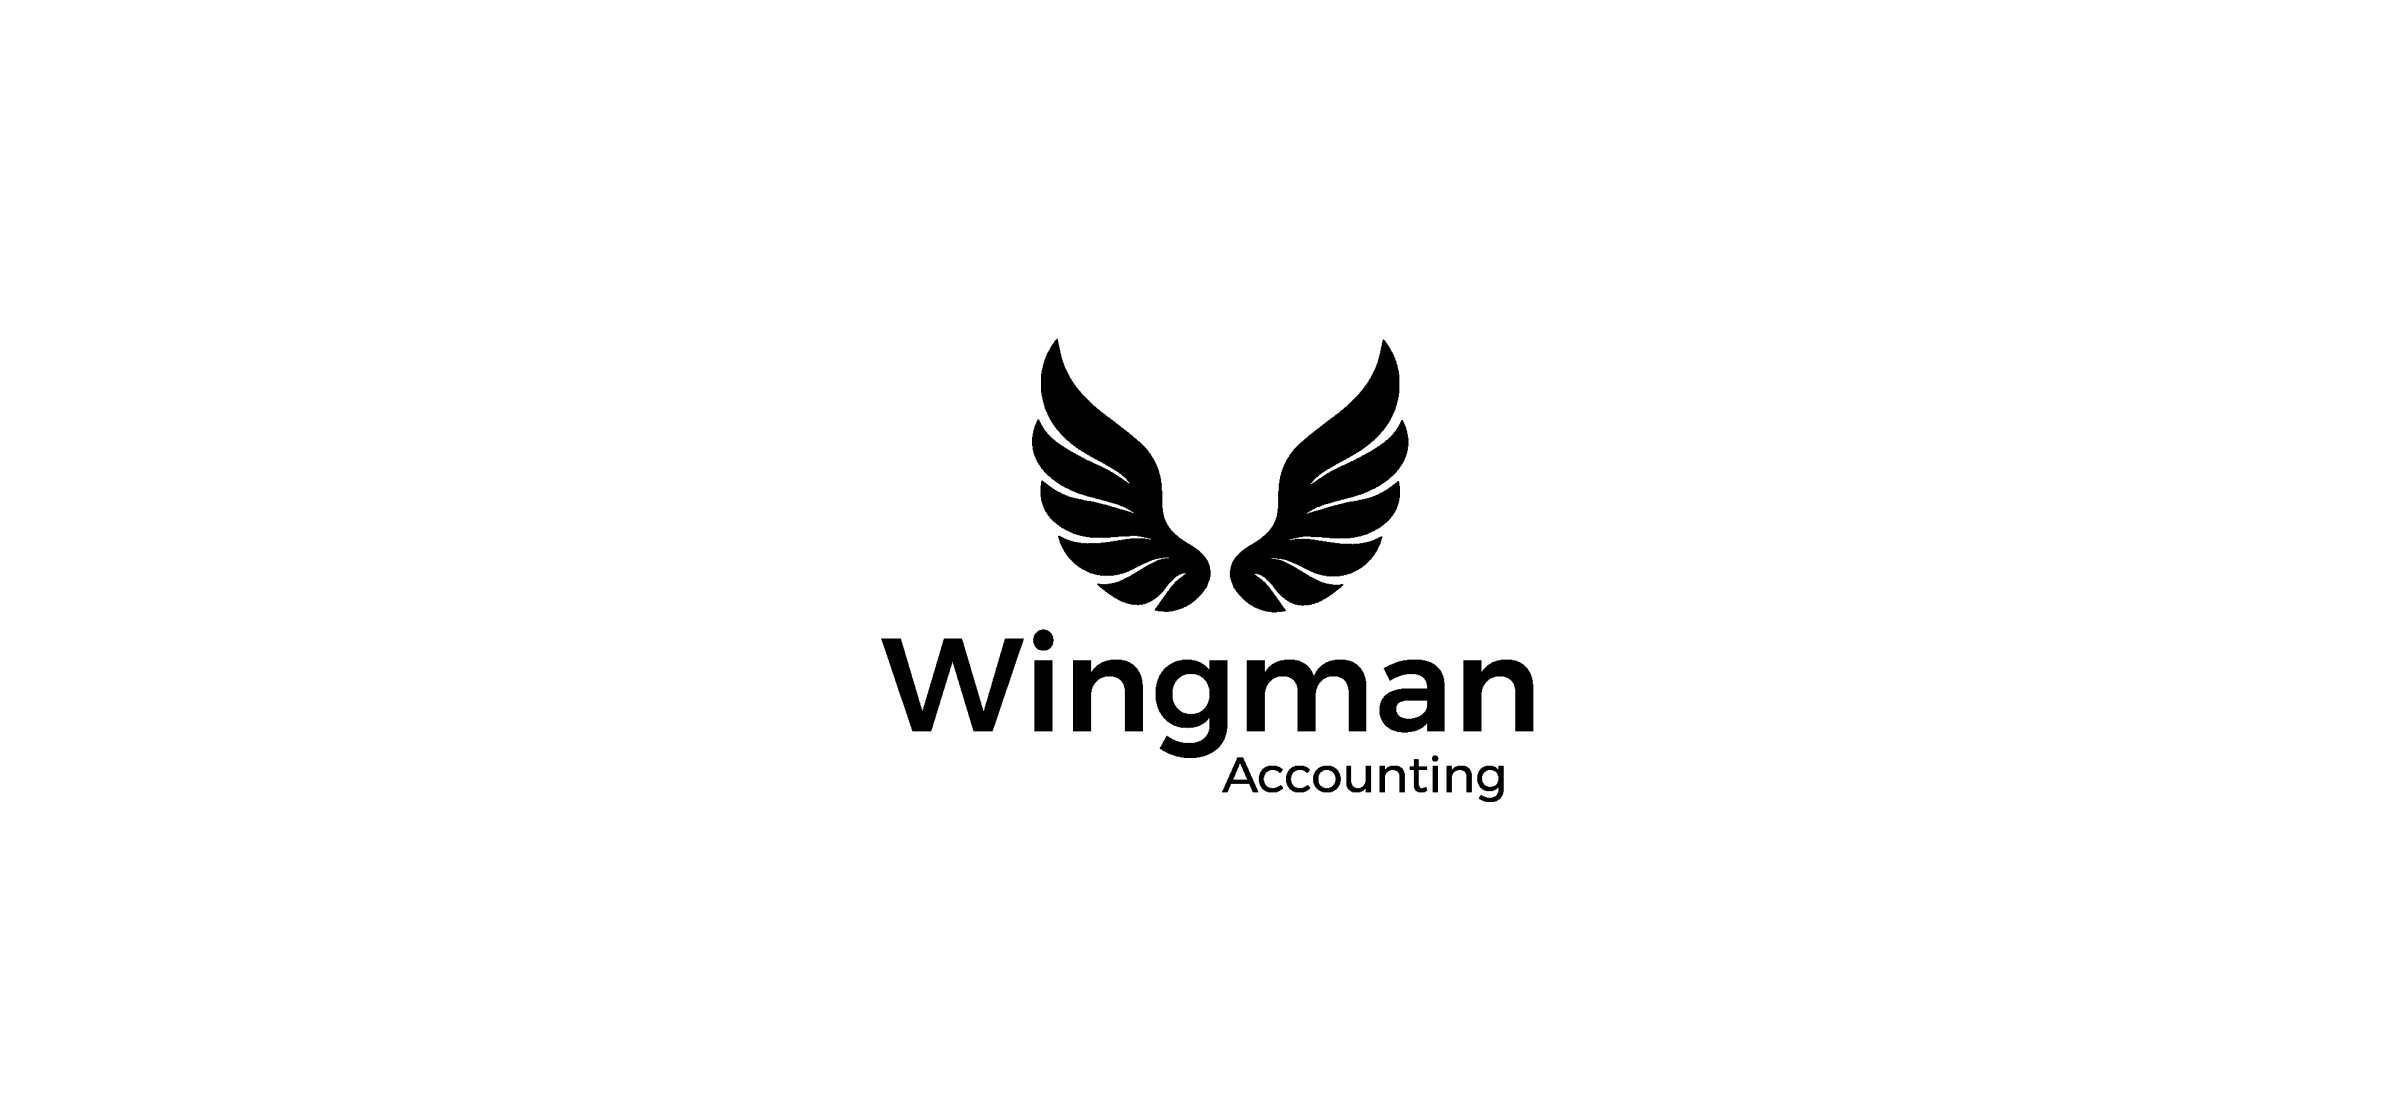 The Wingman logo